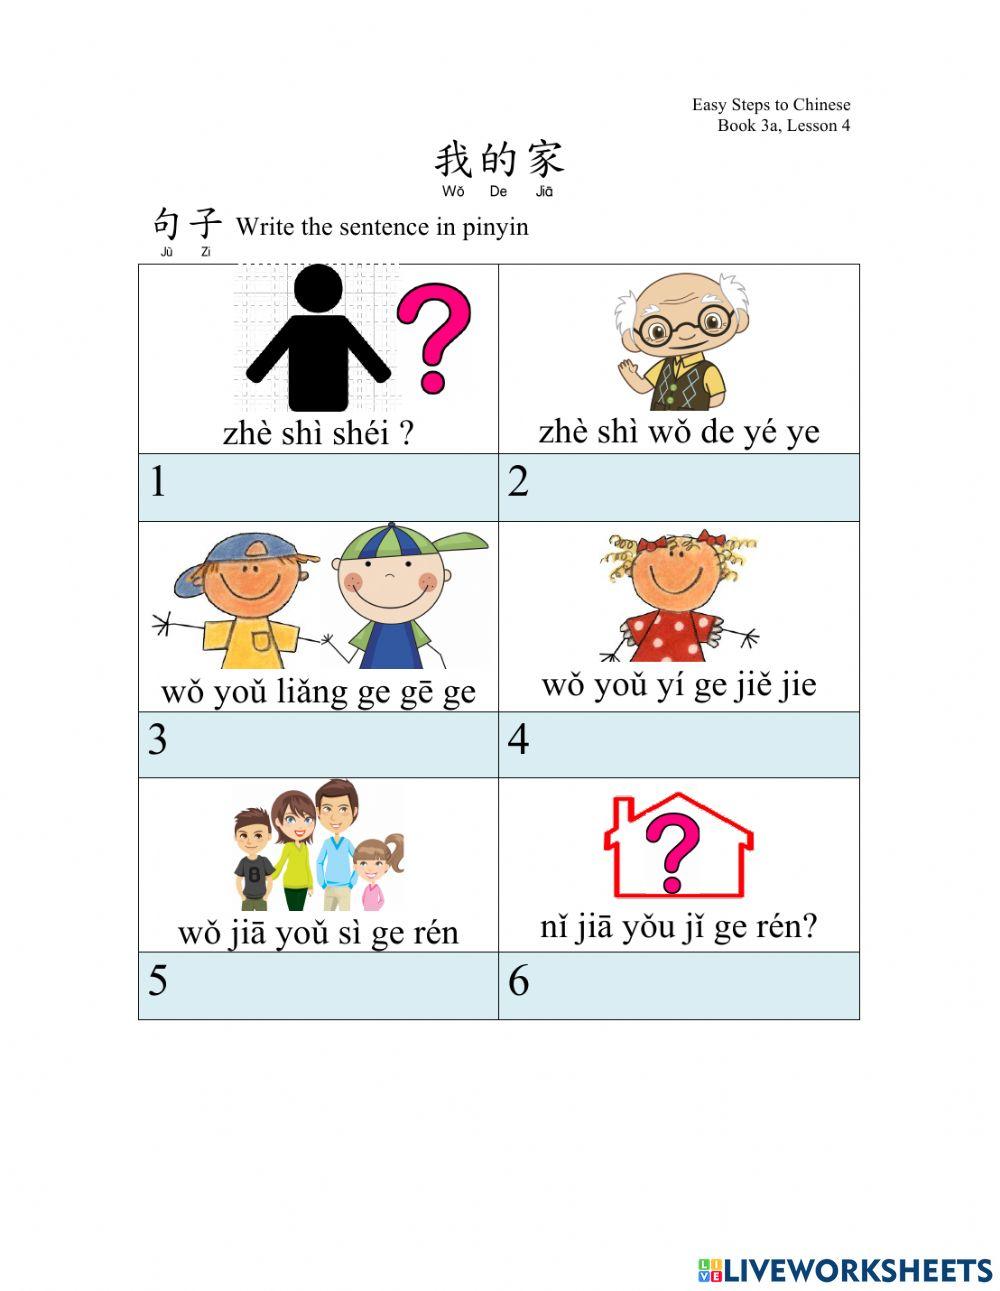 Family Sentence-Pinyin write